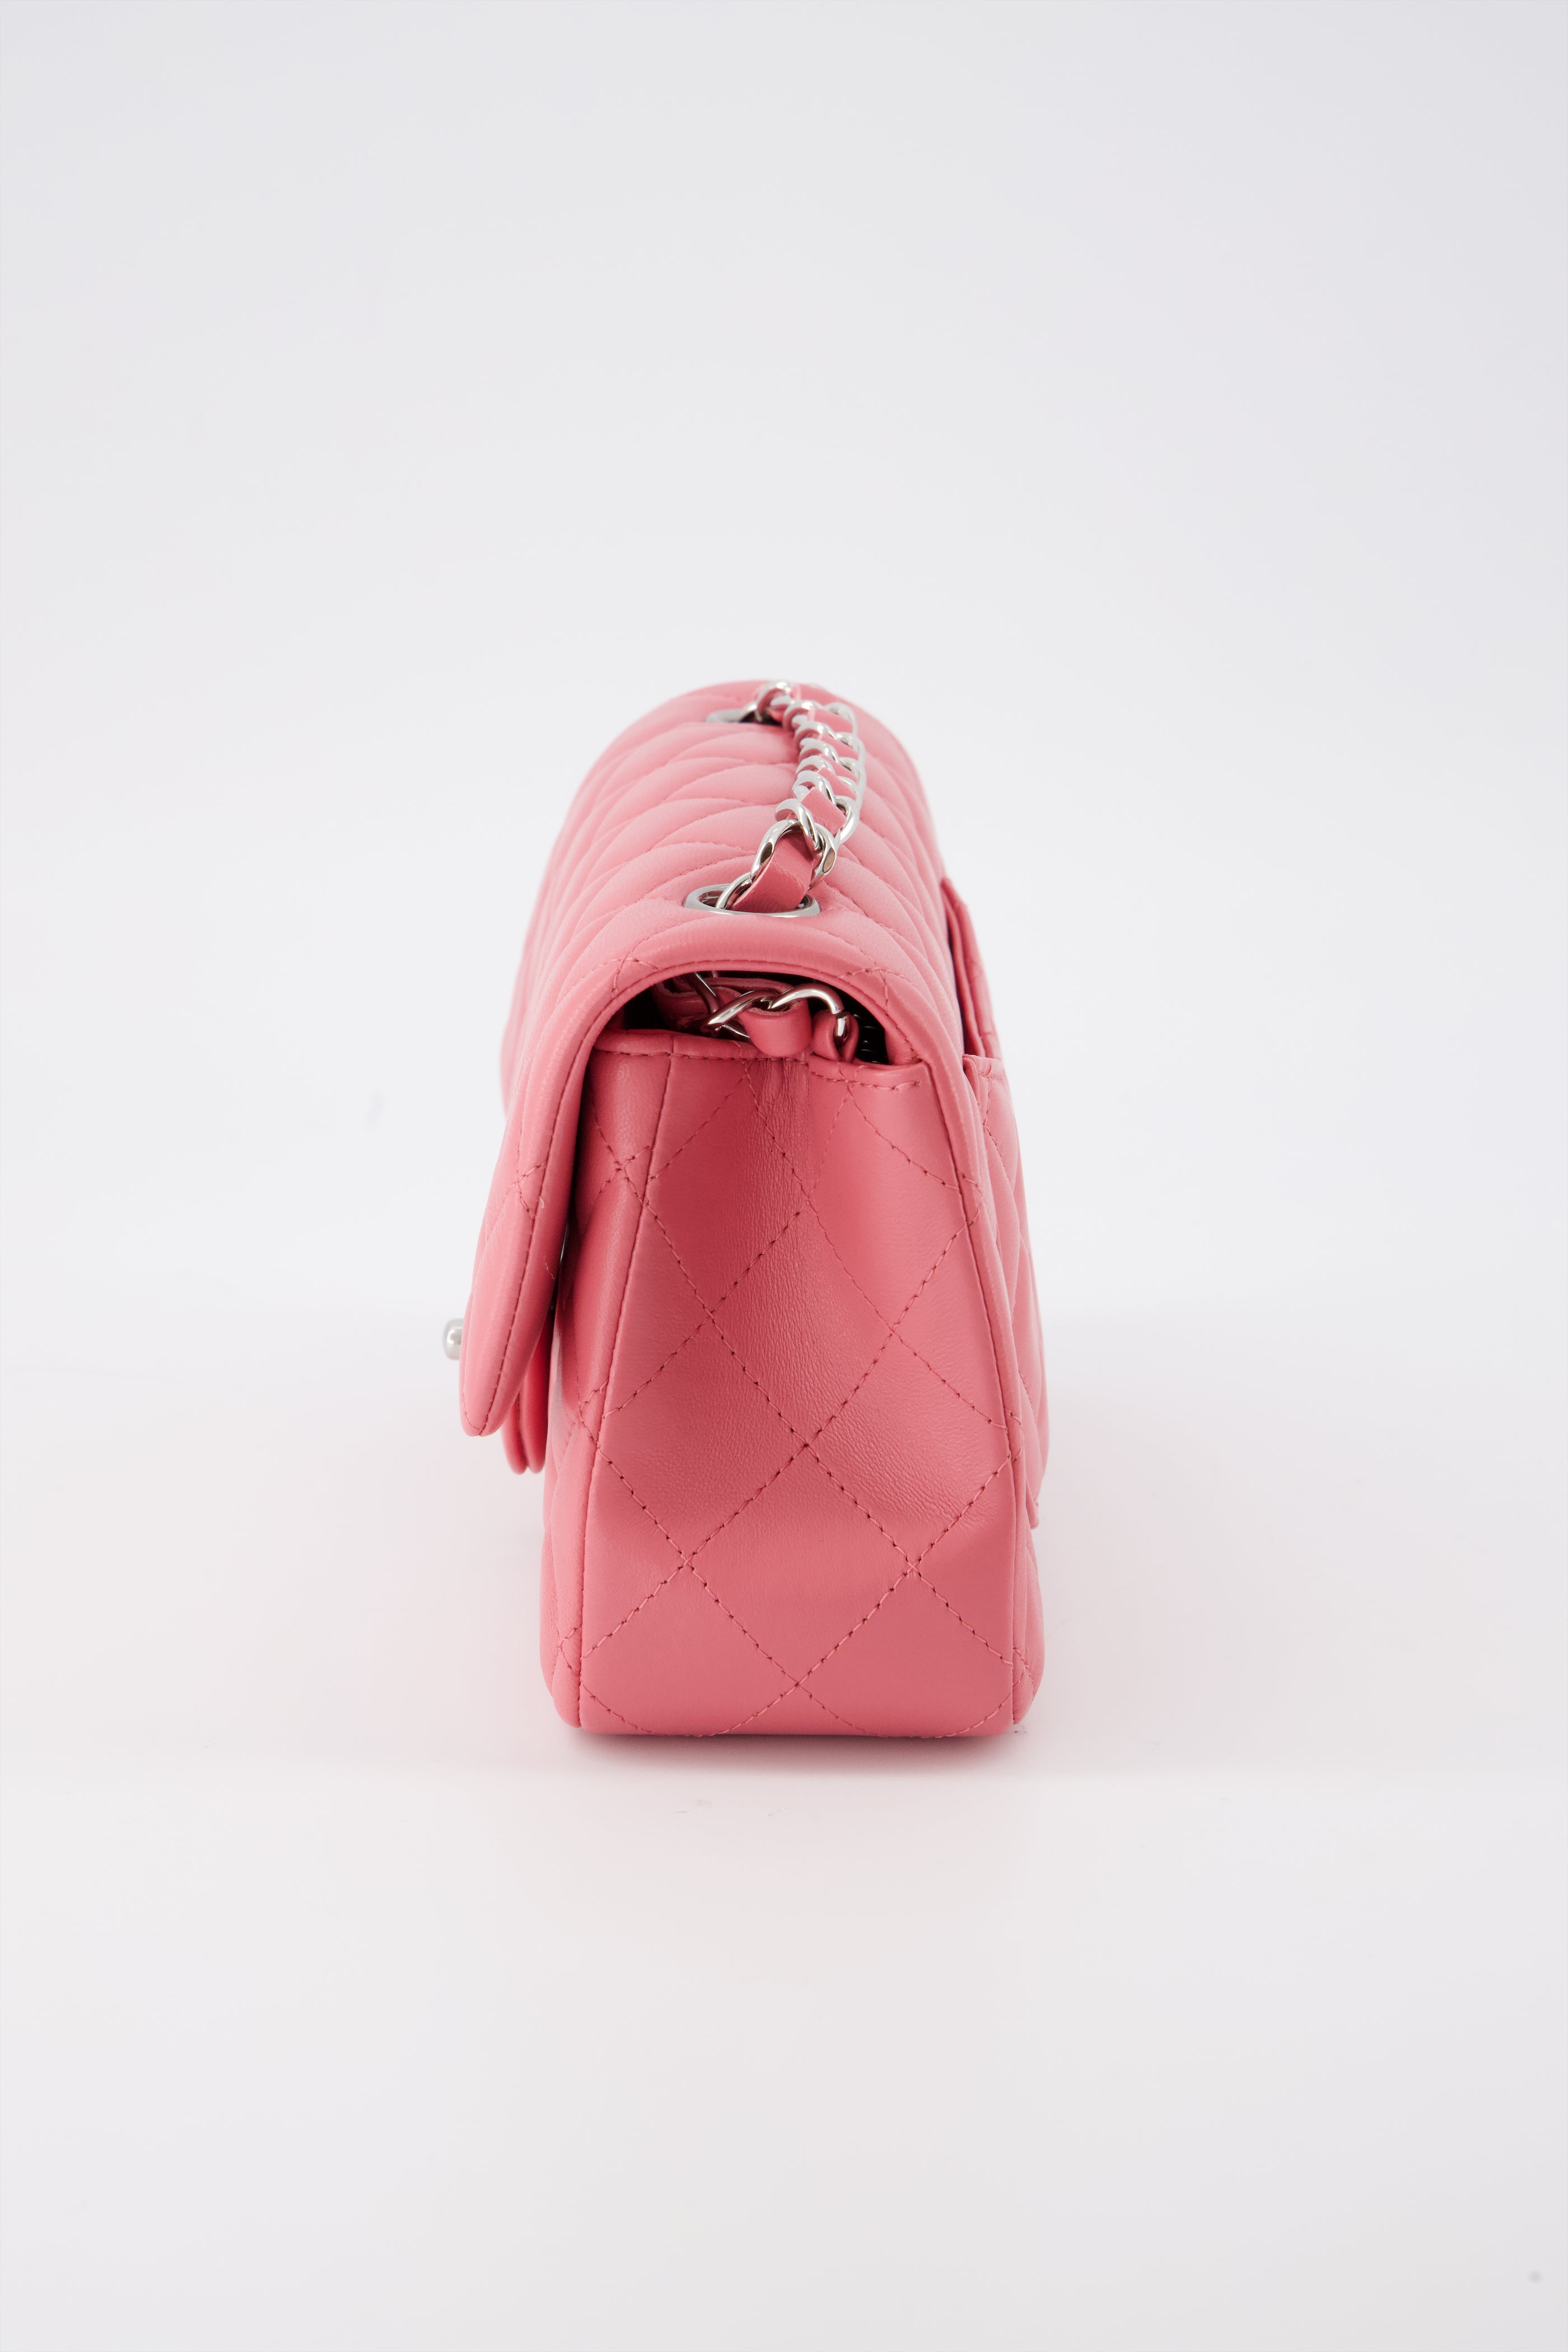 Chanel Pink Mini Rectangular Single Flap Bag